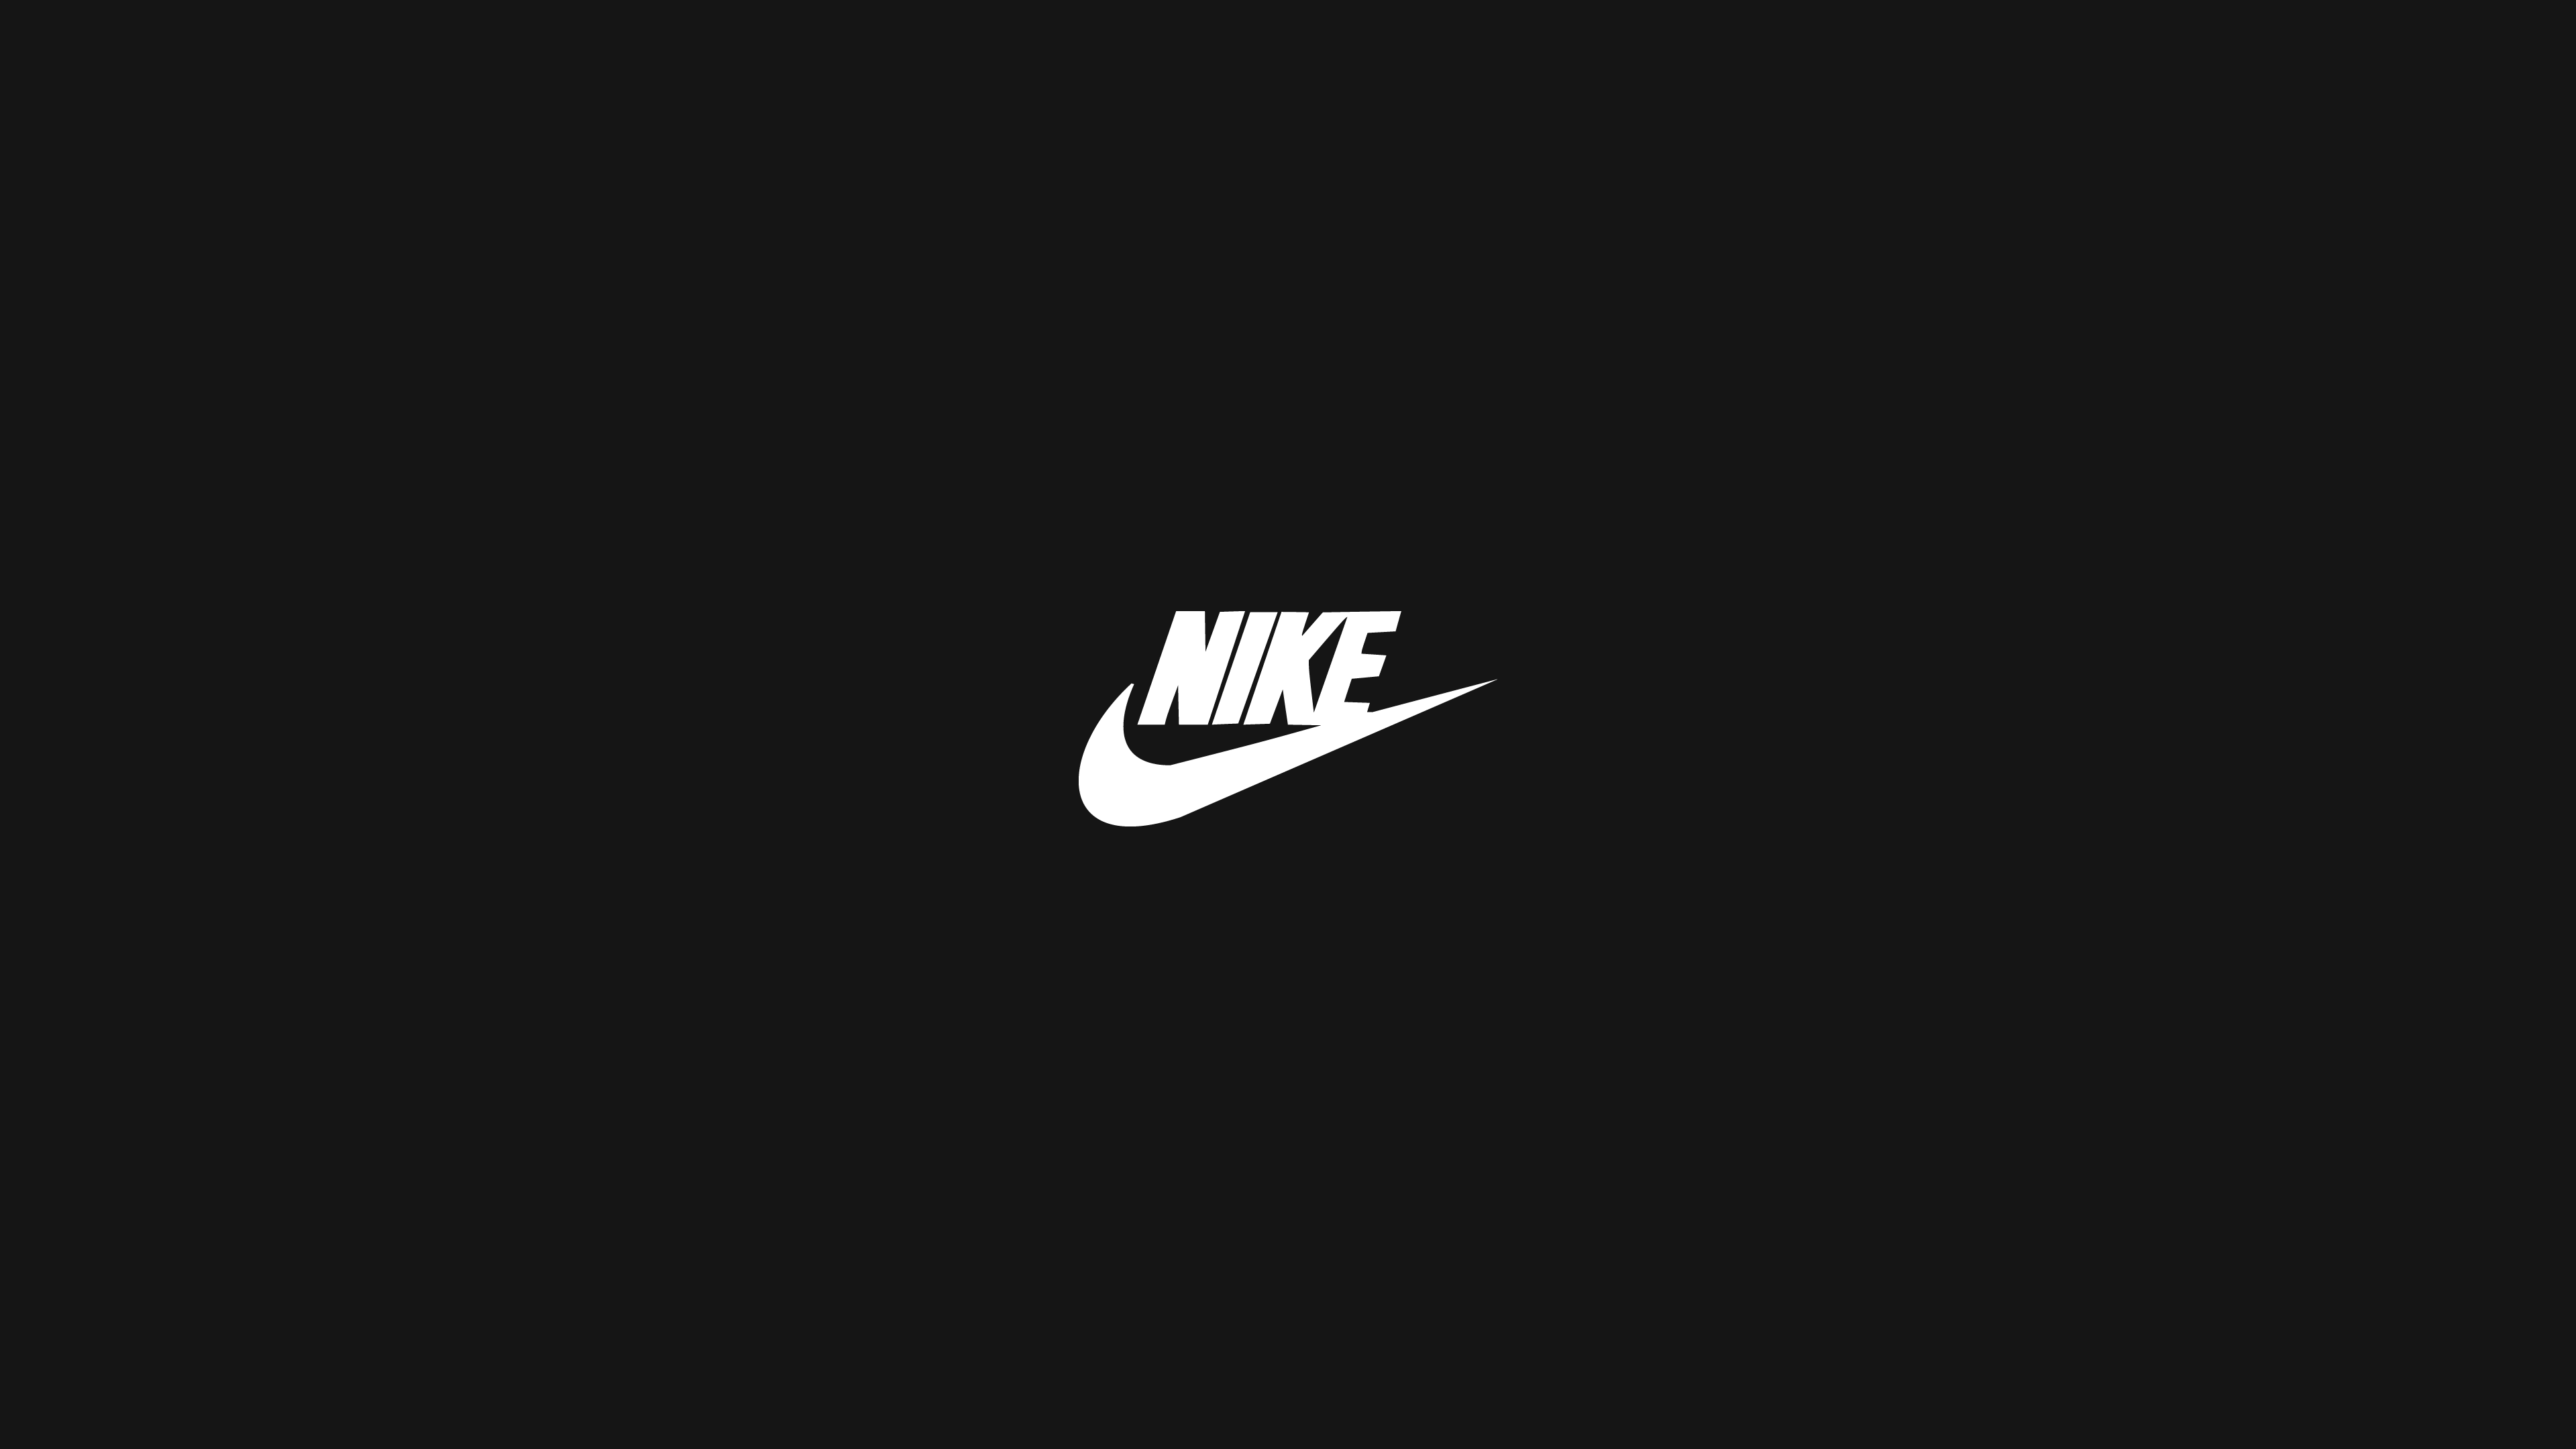 Обои на айфон найк. Nike Air logo. Найк лого 2020. "Сотворение Адама" Микеланджело, 1511. Обои Nike.